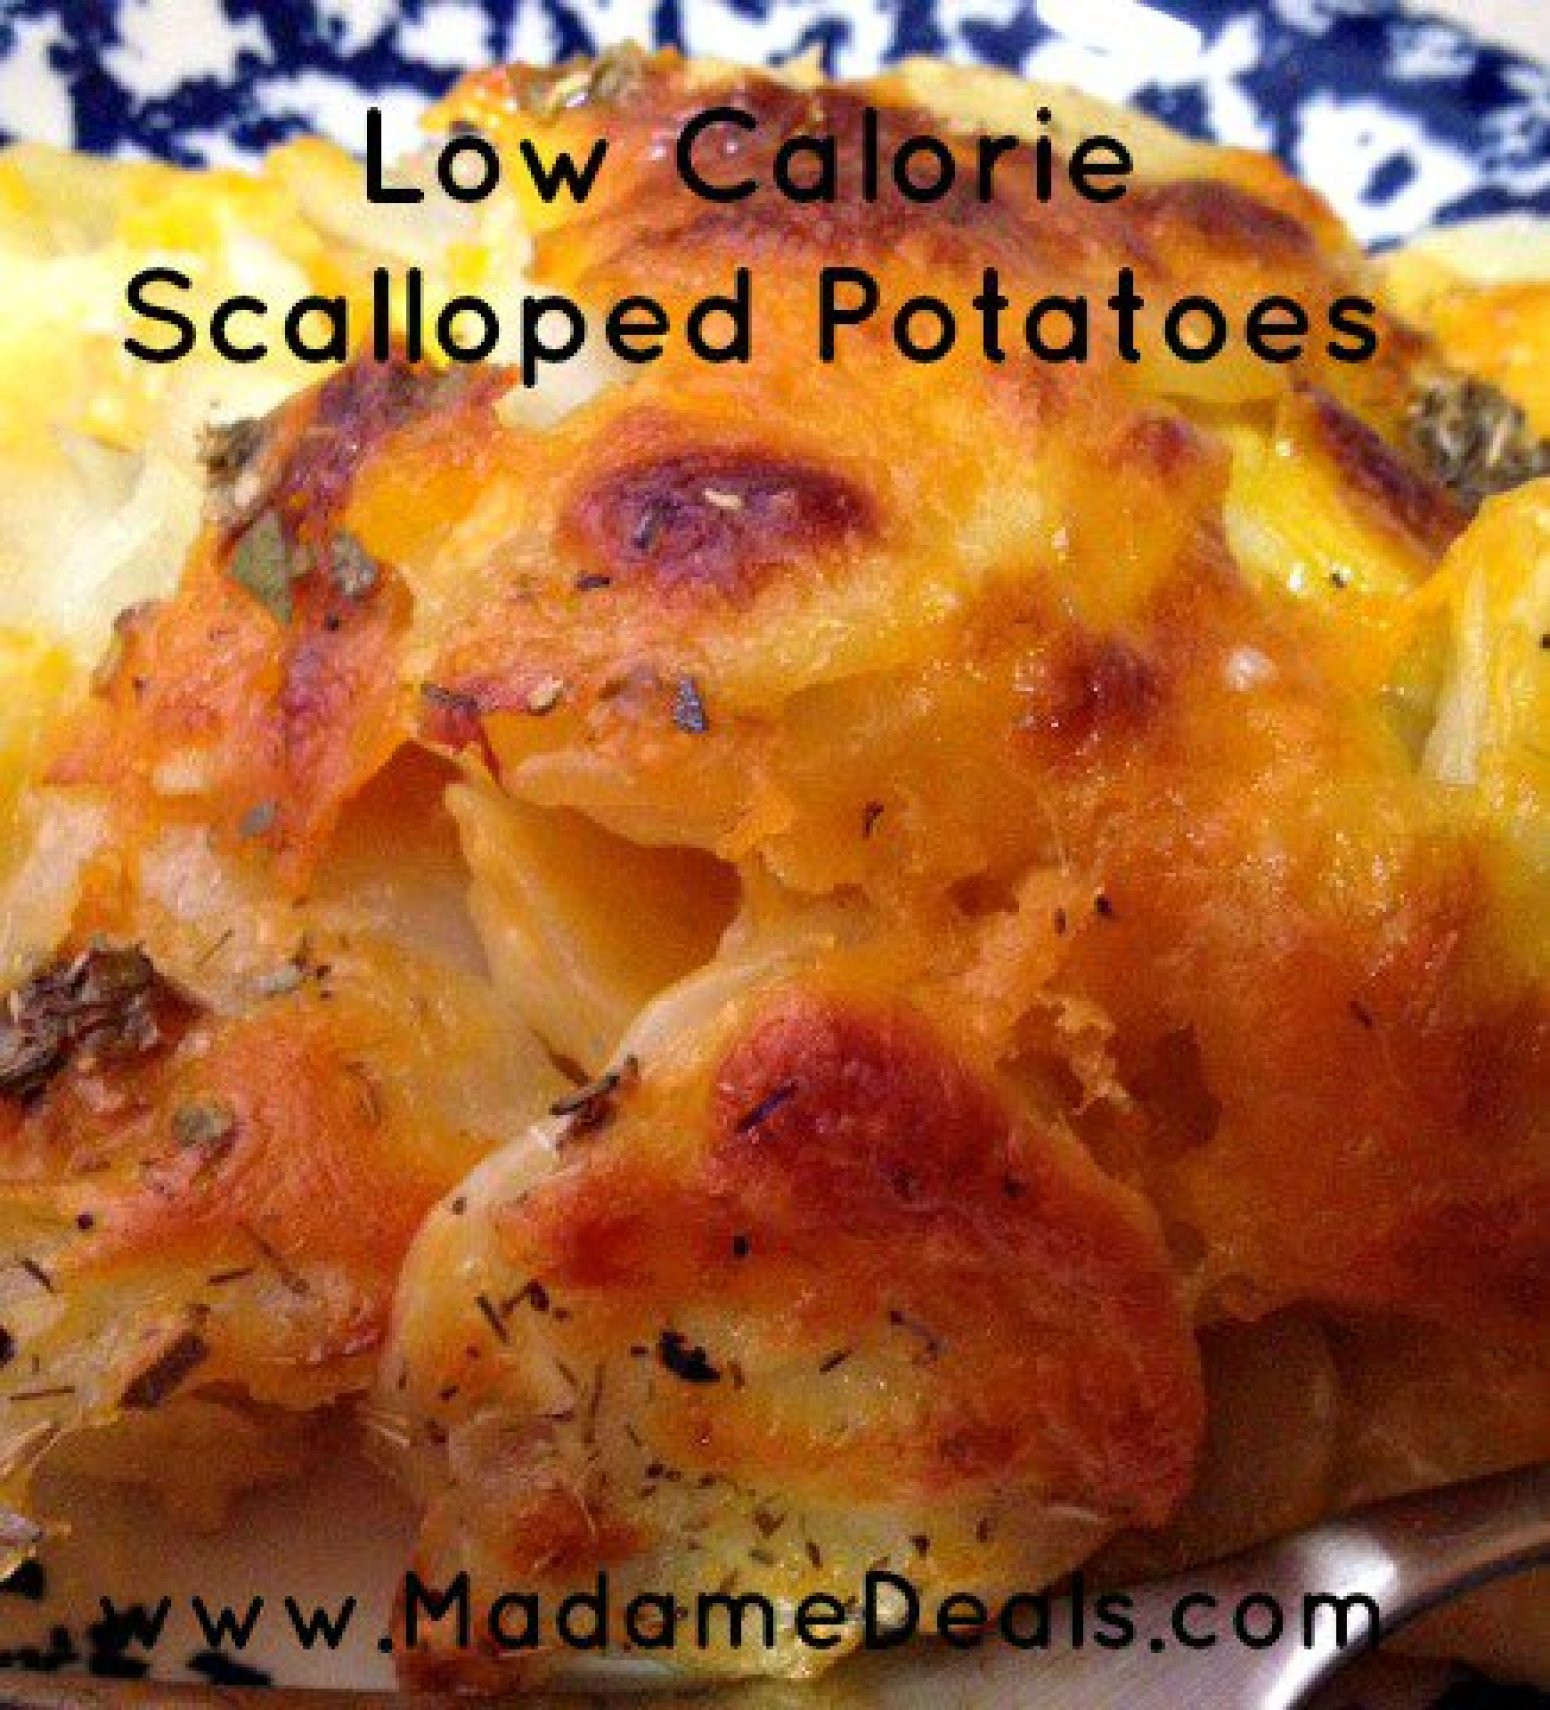 Low Calorie Scallop Recipes
 Low Calorie Scalloped Potatoes Recipe